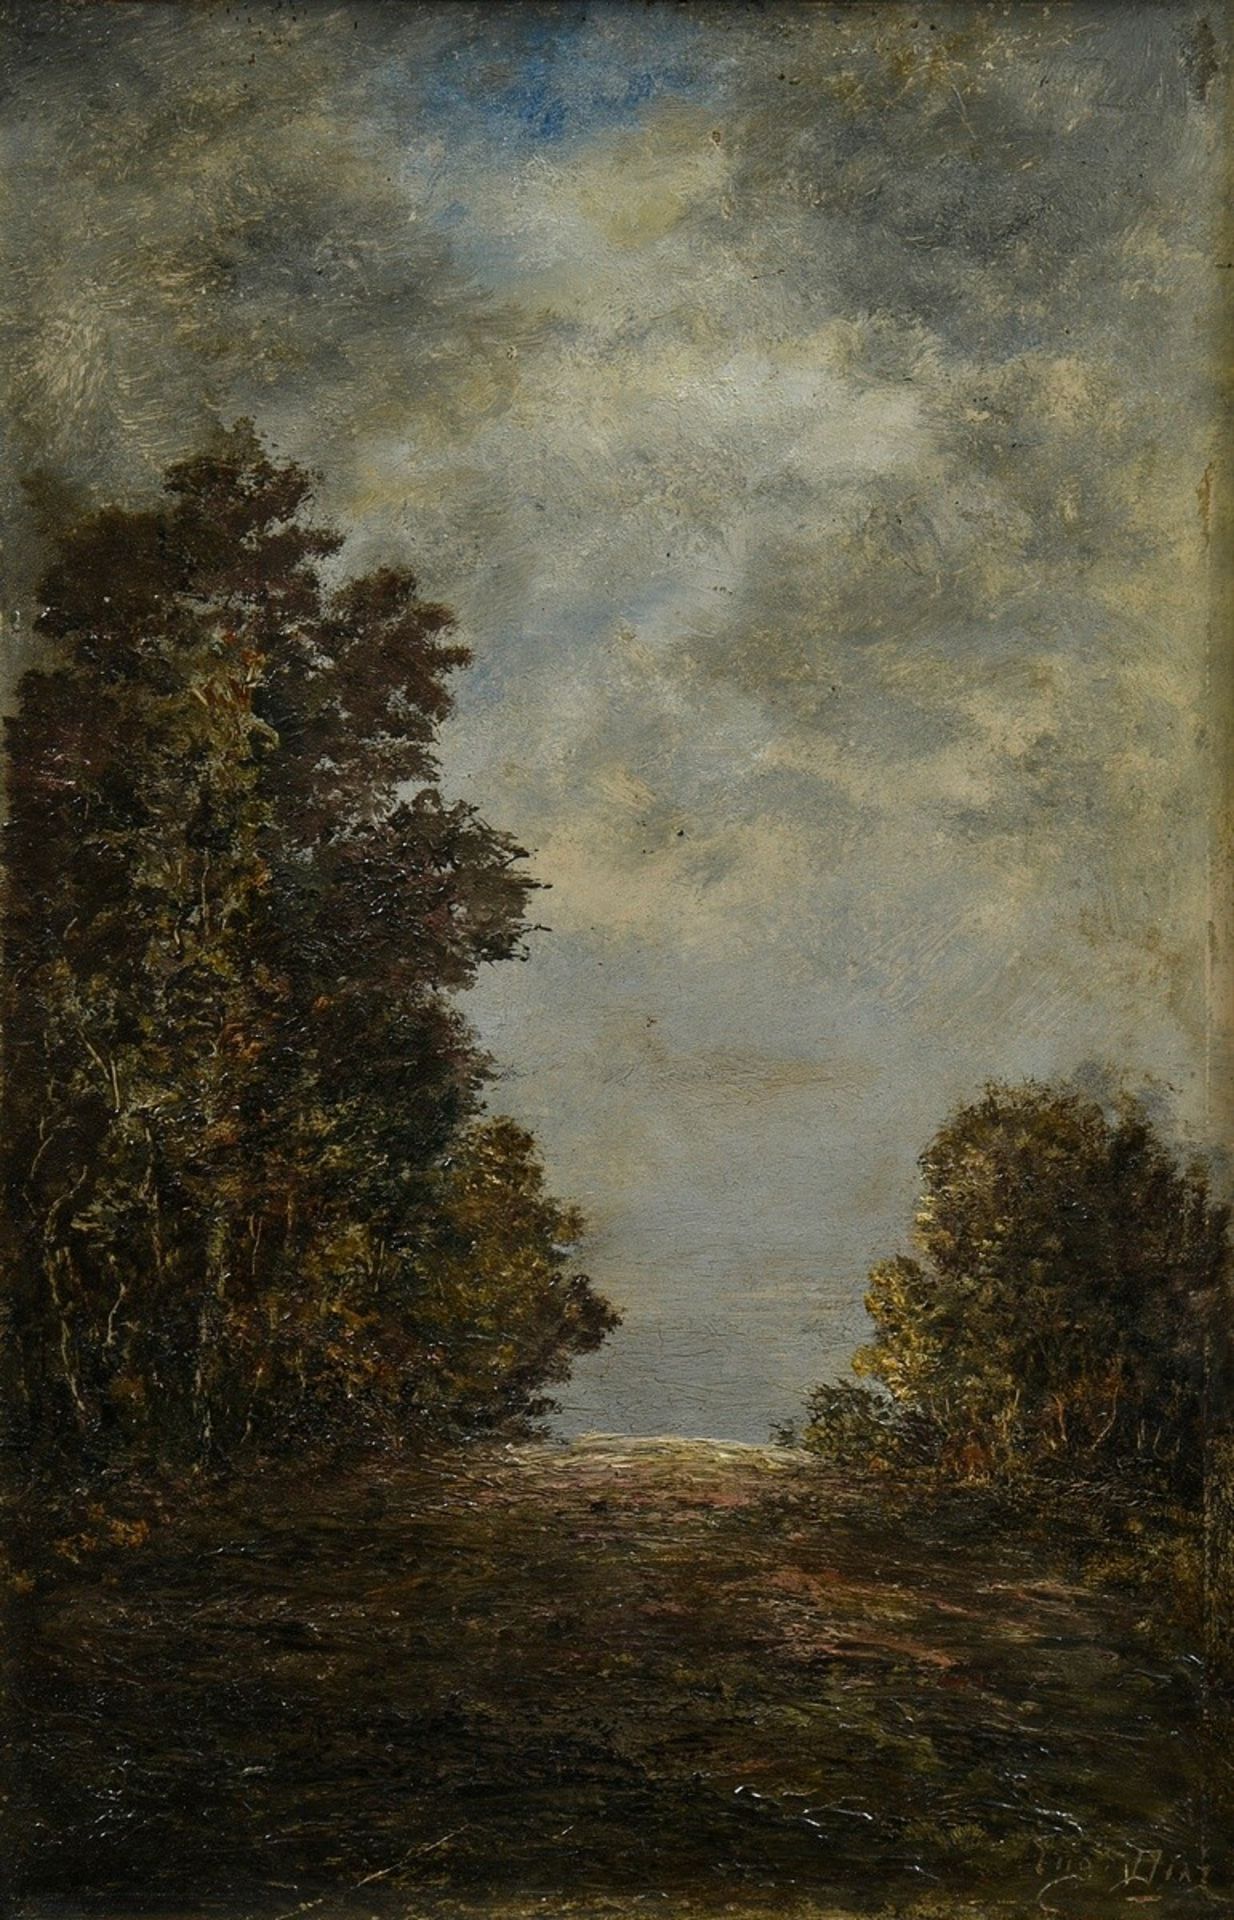 Diaz de la Peña, Eugène (1837-1901) "Landscape" 1880, oil/wood, b.r. sign., verso sign./dat./dedica